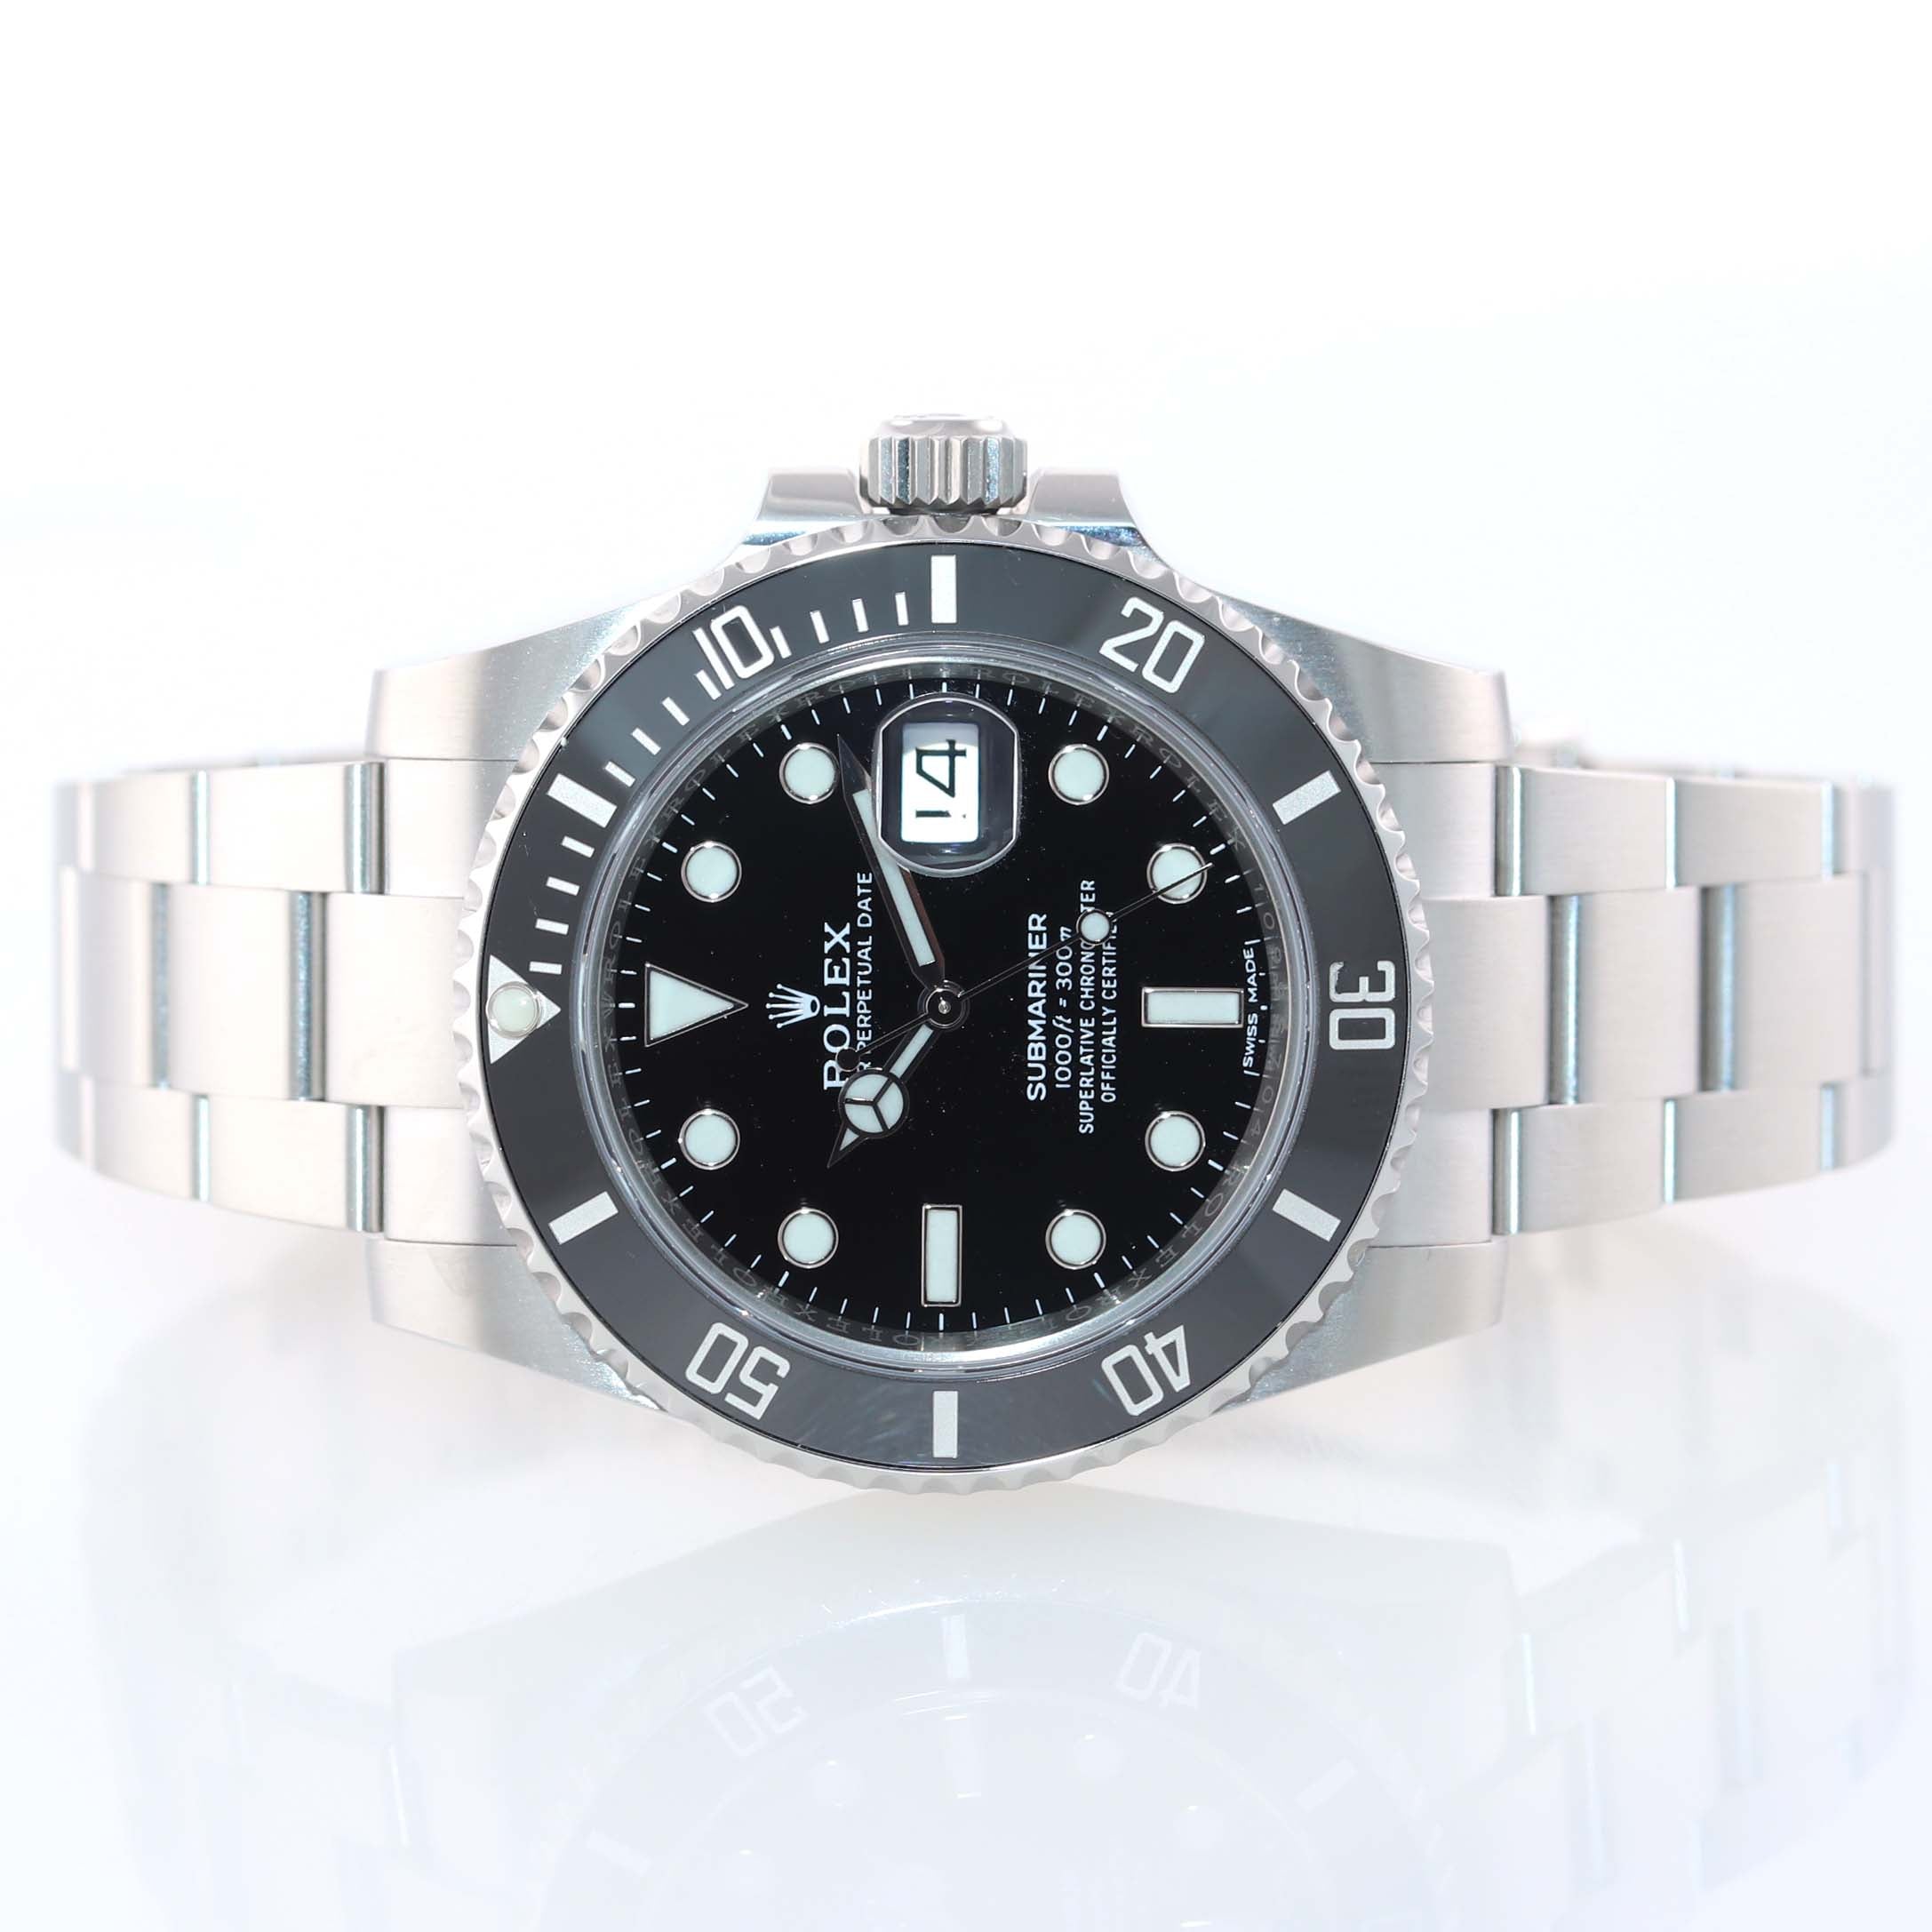 BRAND NEW 2019 PAPERS Rolex Submariner Date 116610 Steel Black Ceramic Watch